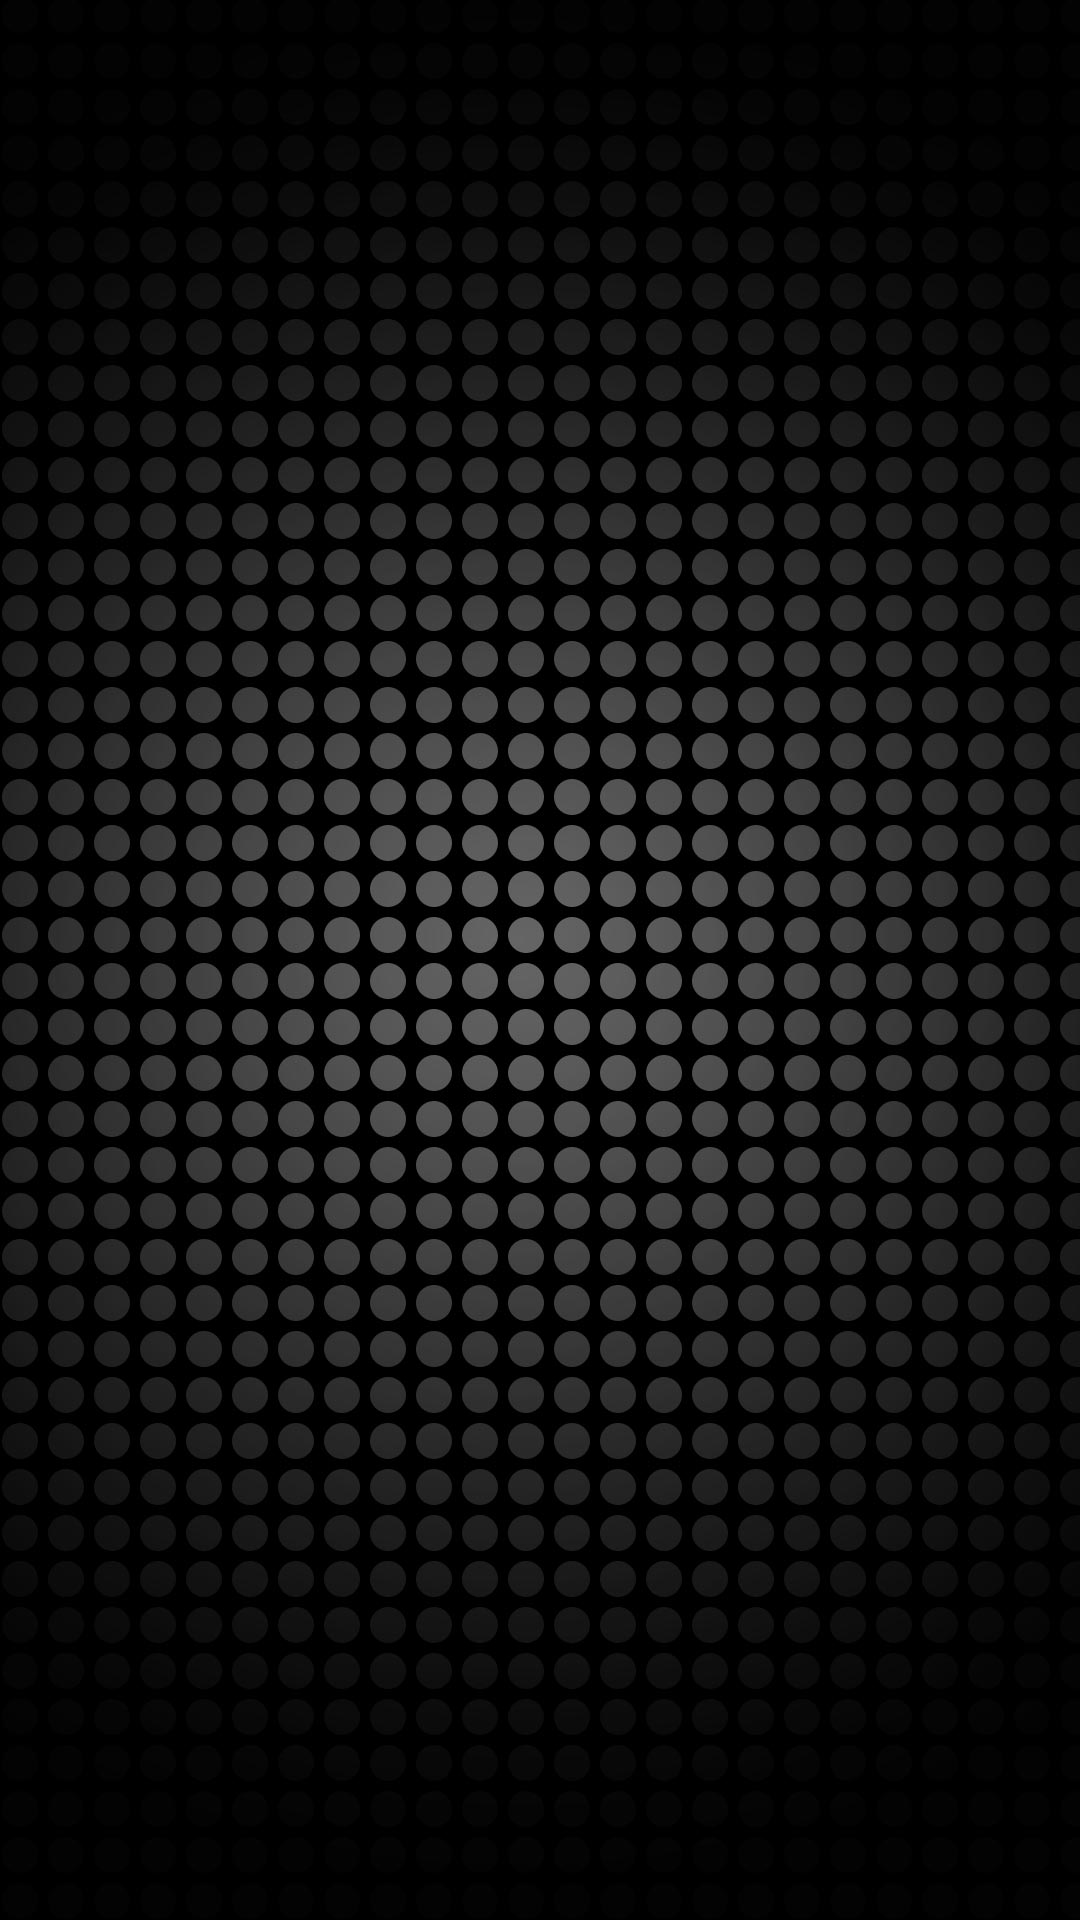 hd black wallpaper with gray dots